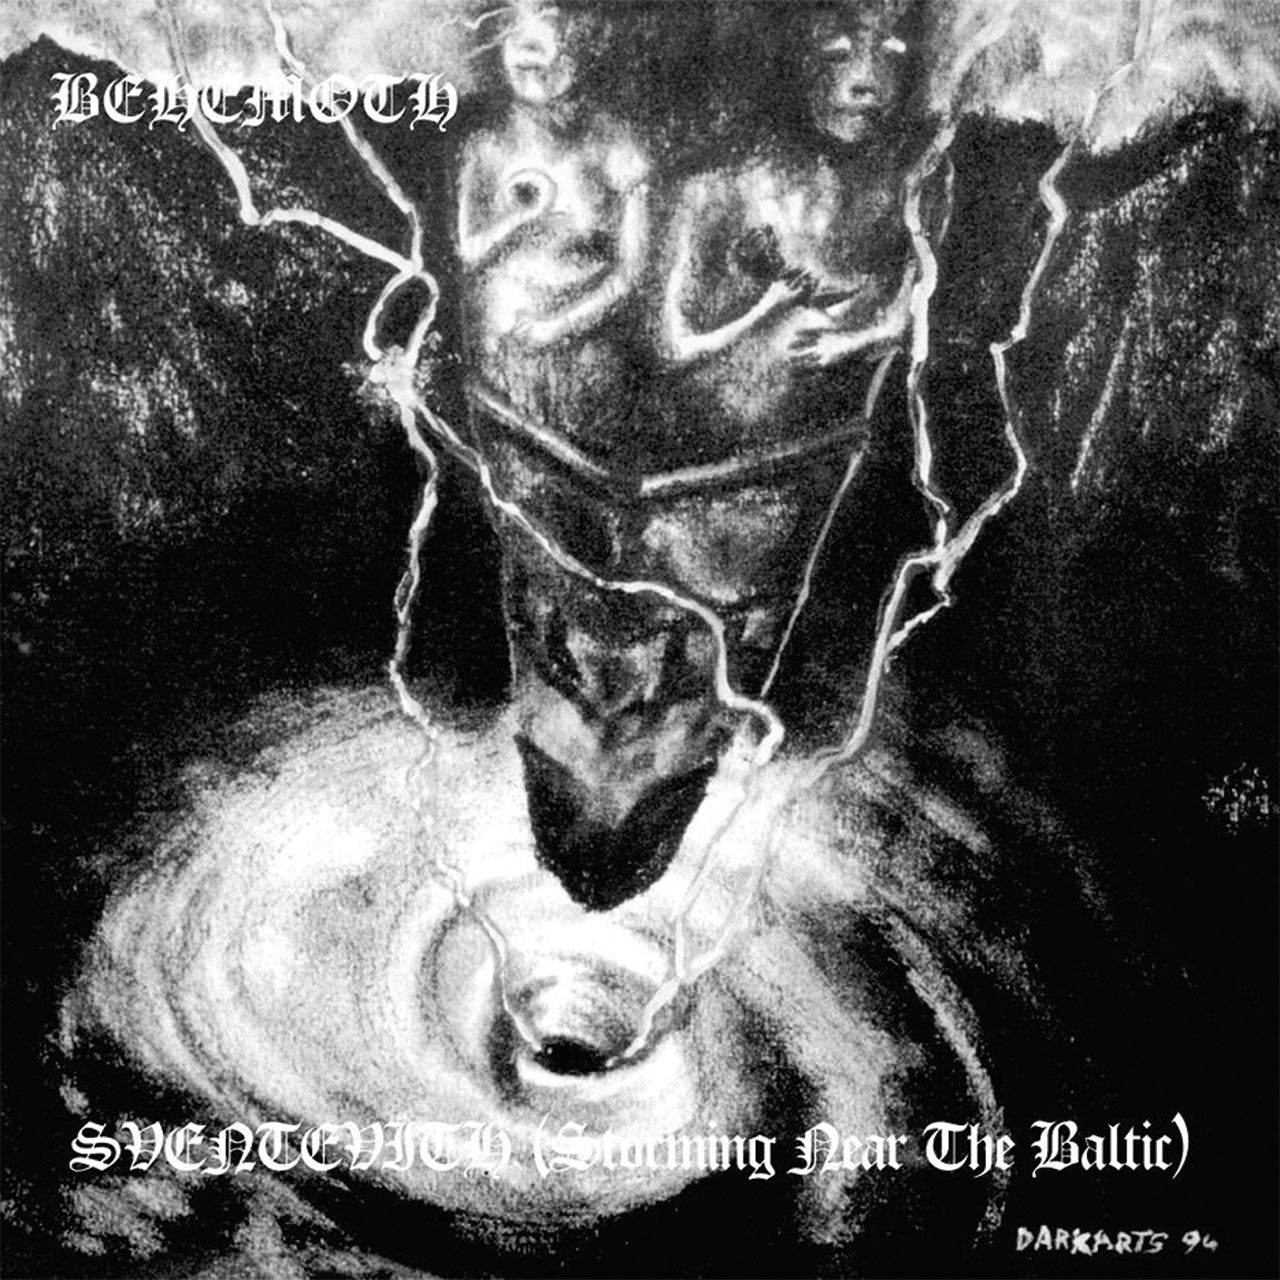 Behemoth - Sventevith (Storming Near the Baltic) (2005 Reissue) (CD)